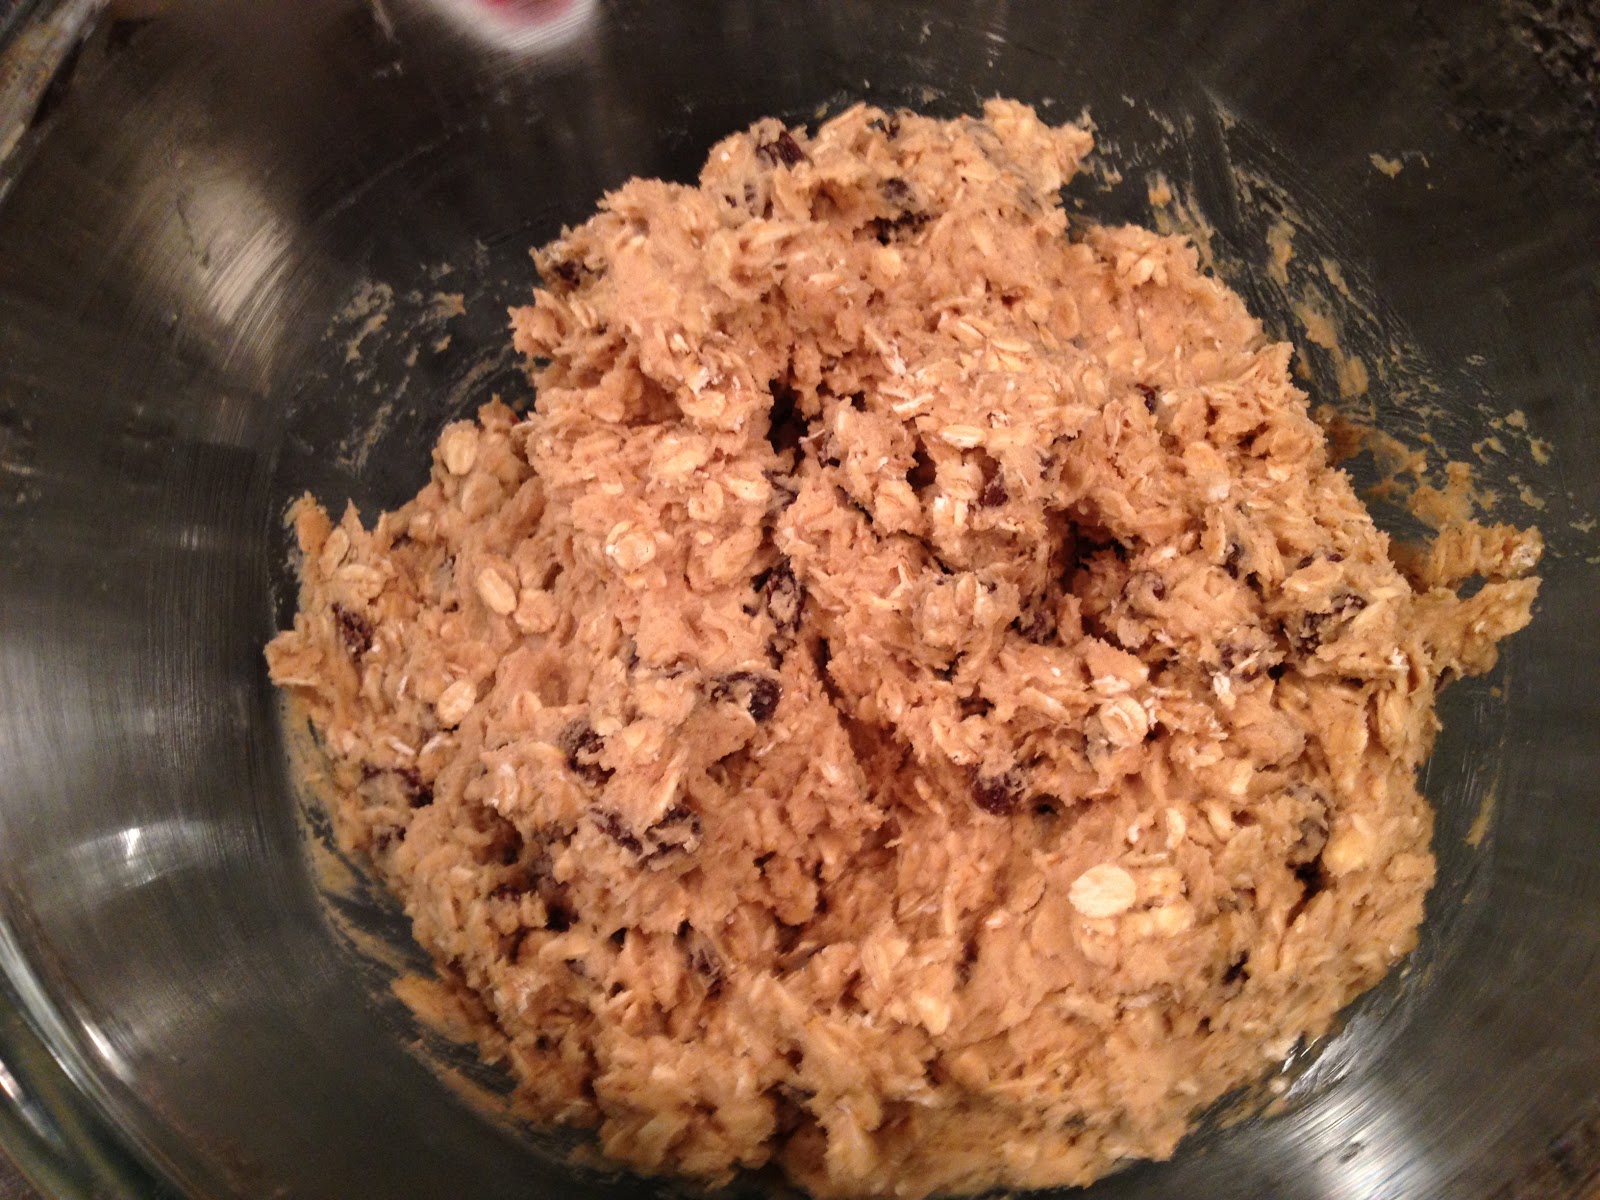 Emily a la Blog: Auntie Em's Oatmeal Raisin Cookies